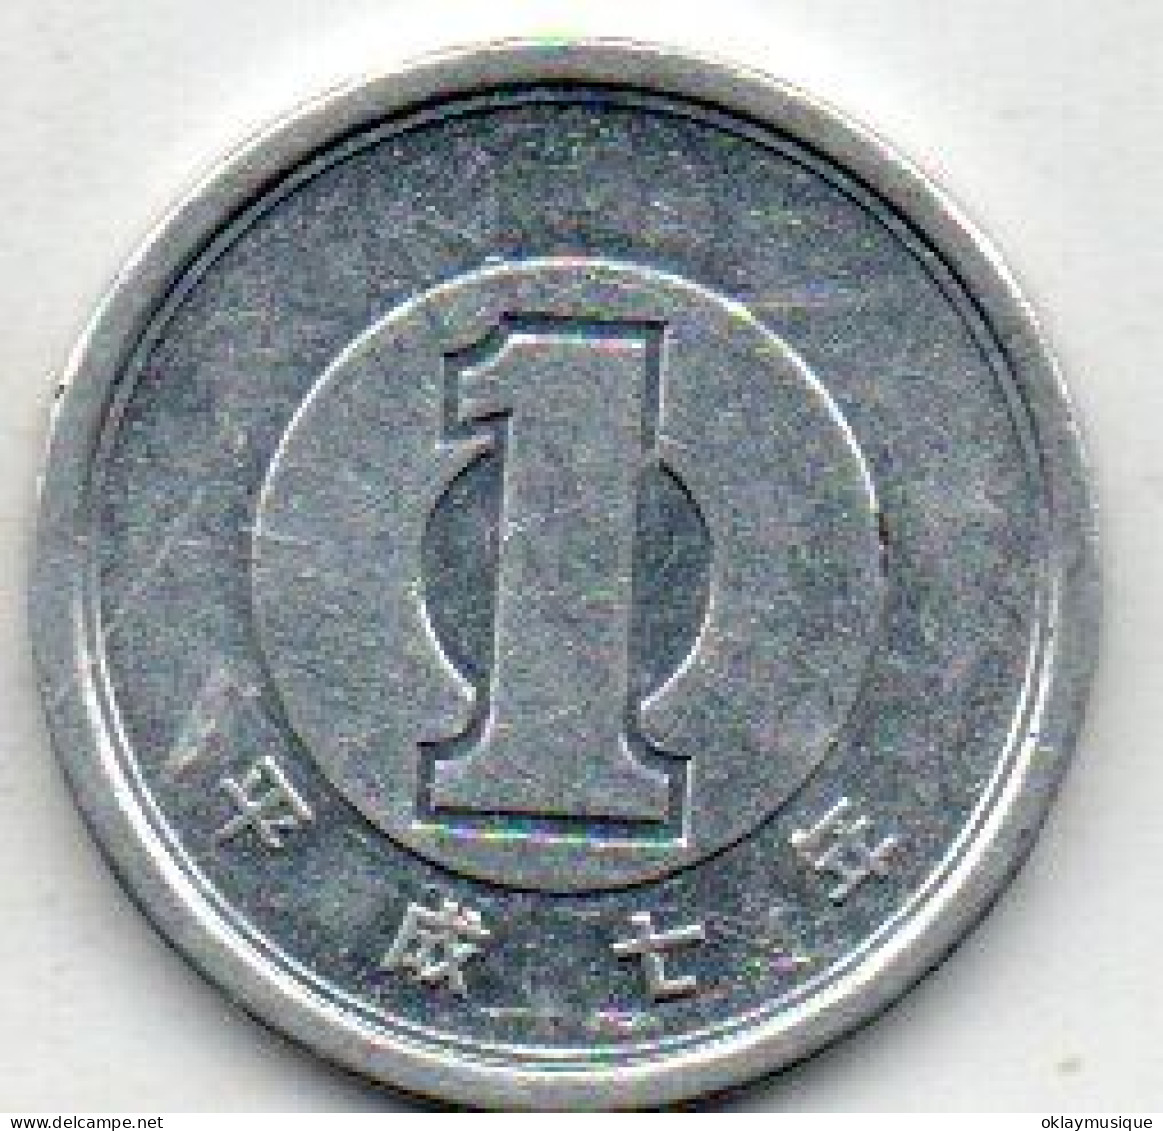 1 Yen 1989-19 - Chine